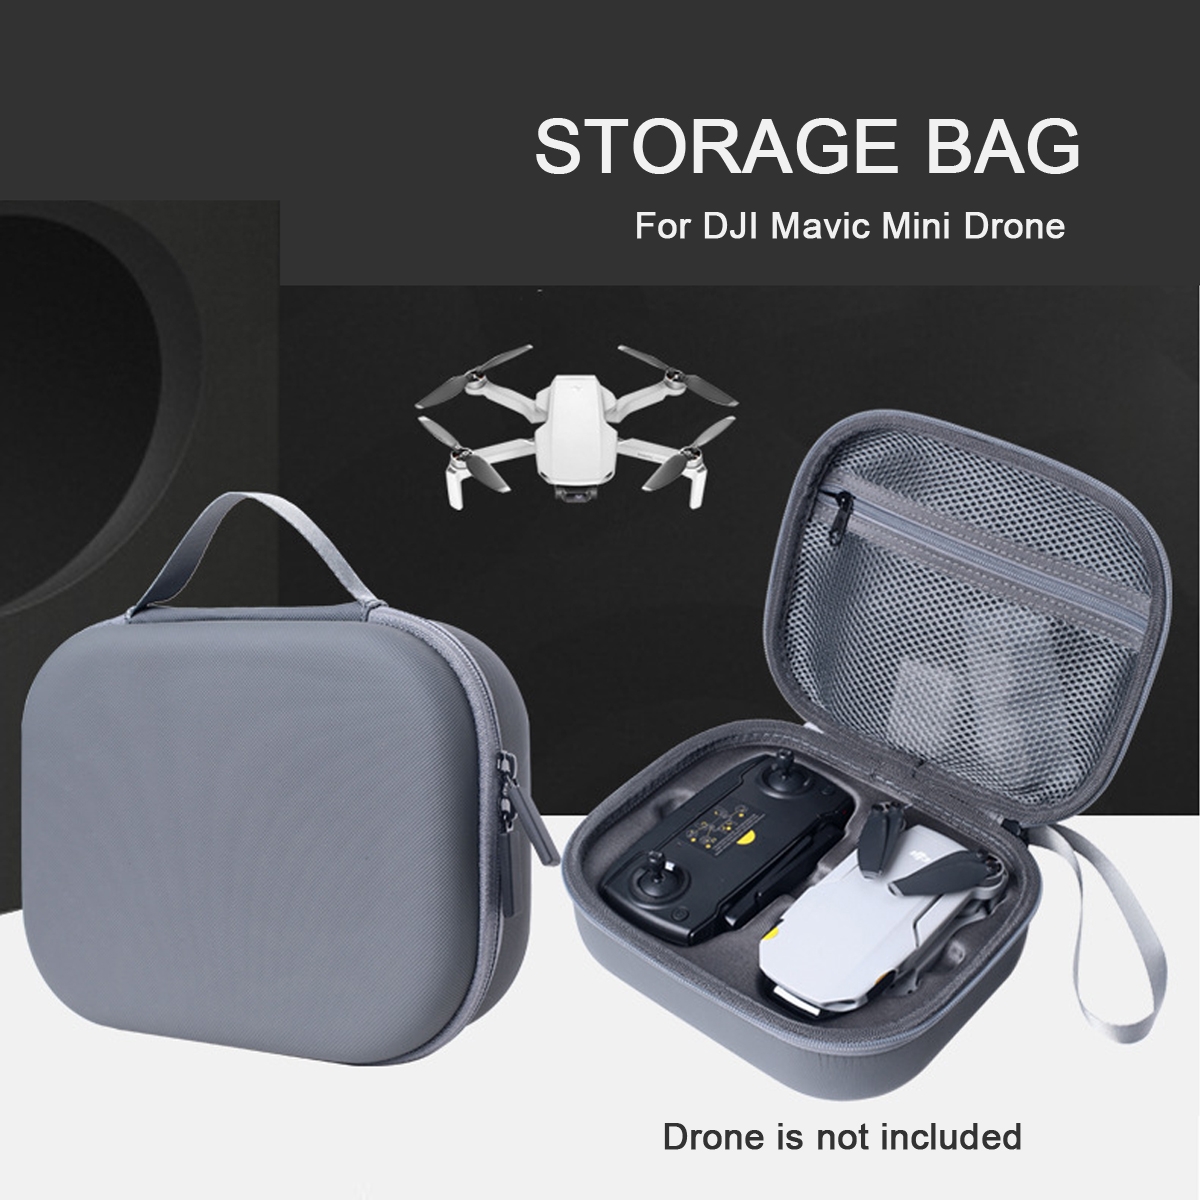 Portable Handheld Carrying Case Storage Travel Bag Suitcase For DJI Mavic Mini Drone